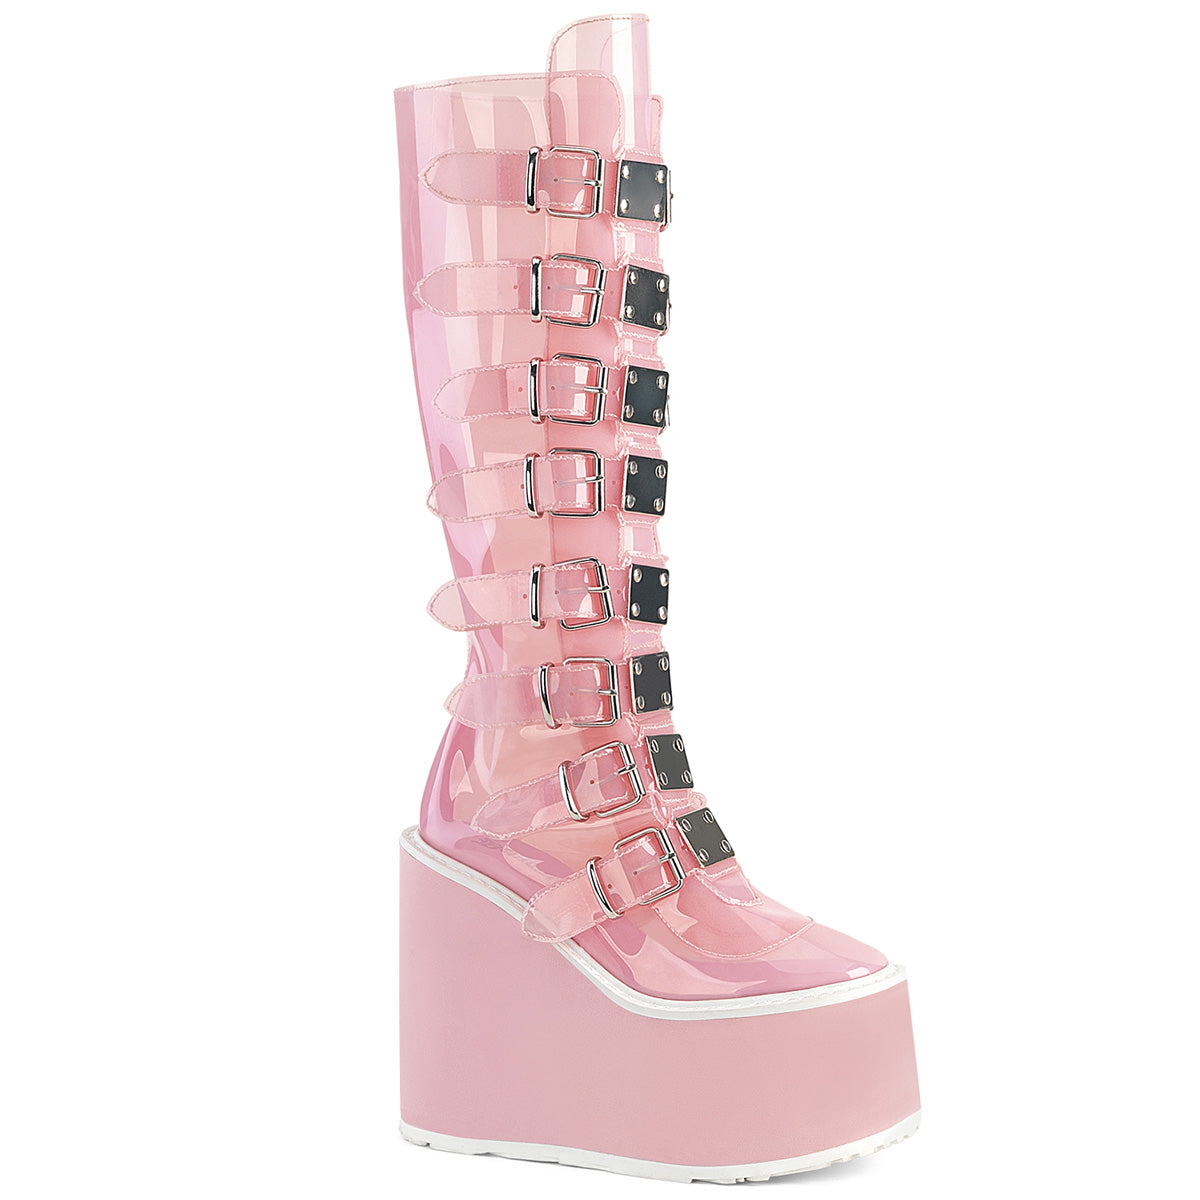 SWING-815C Alternative Footwear Demonia Women's Mid-Calf & Knee High Boots B. Pink TPU